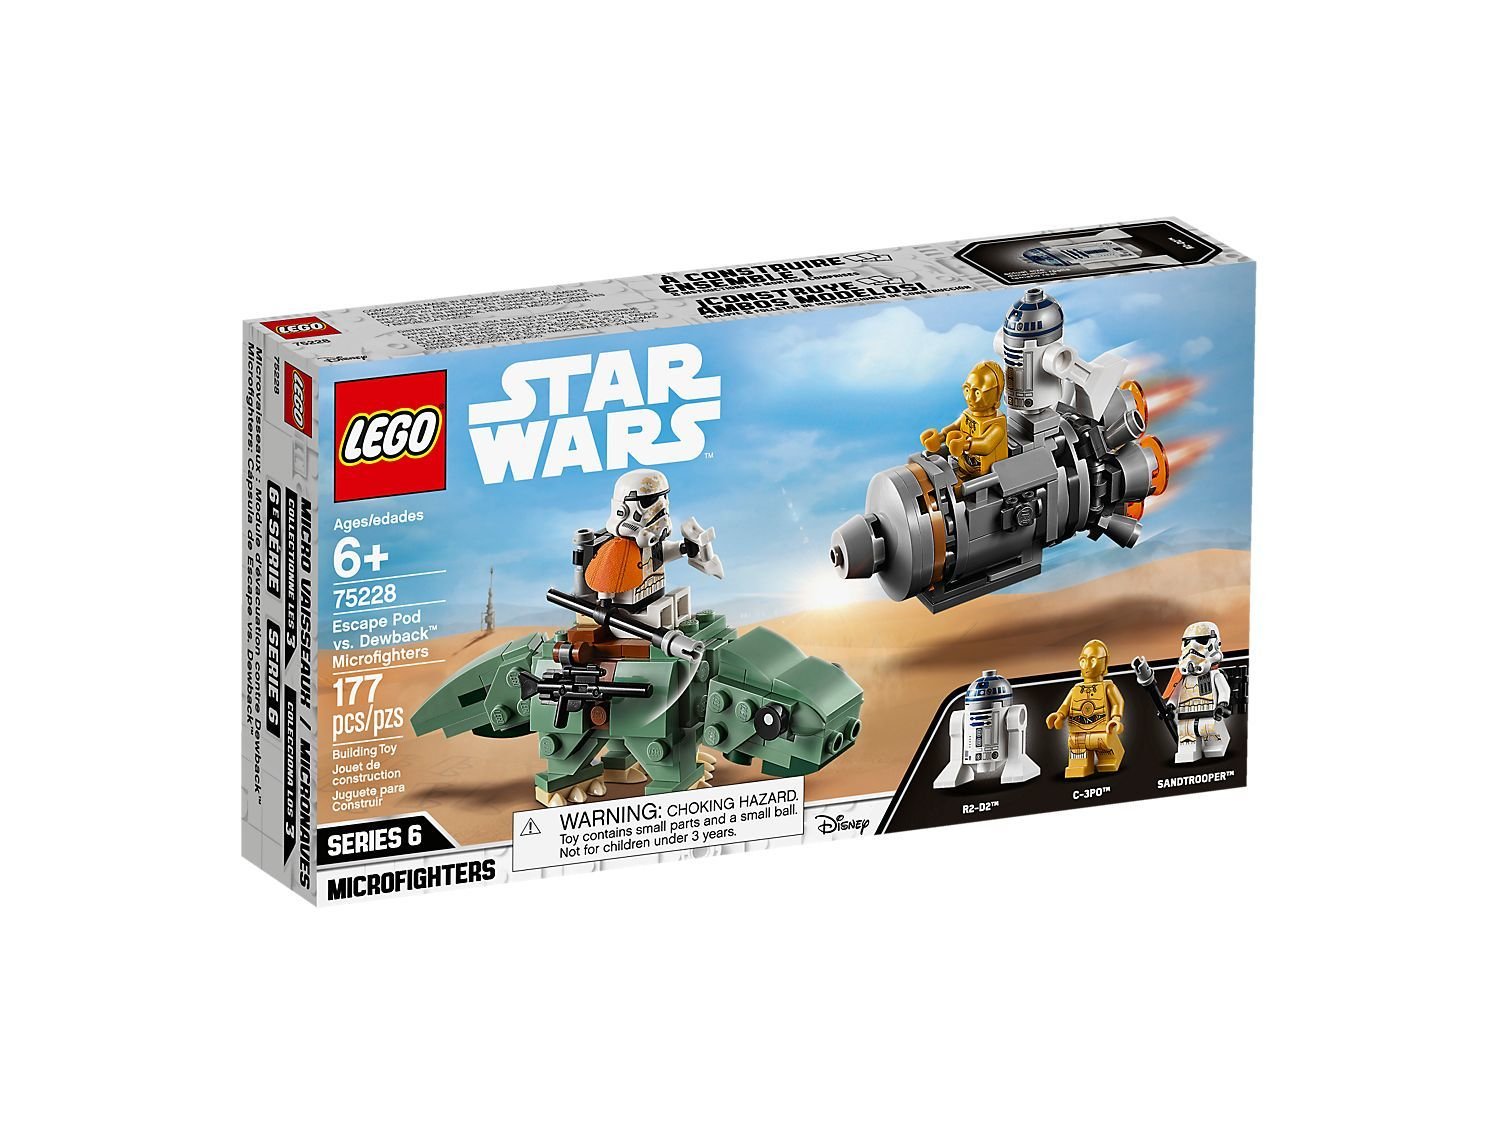  Конструктор LEGO Star Wars ТМ Escape Pod vs. Dewback ™ Microfighters (Мікроістребітель: рятувальна капсула проти росо фото